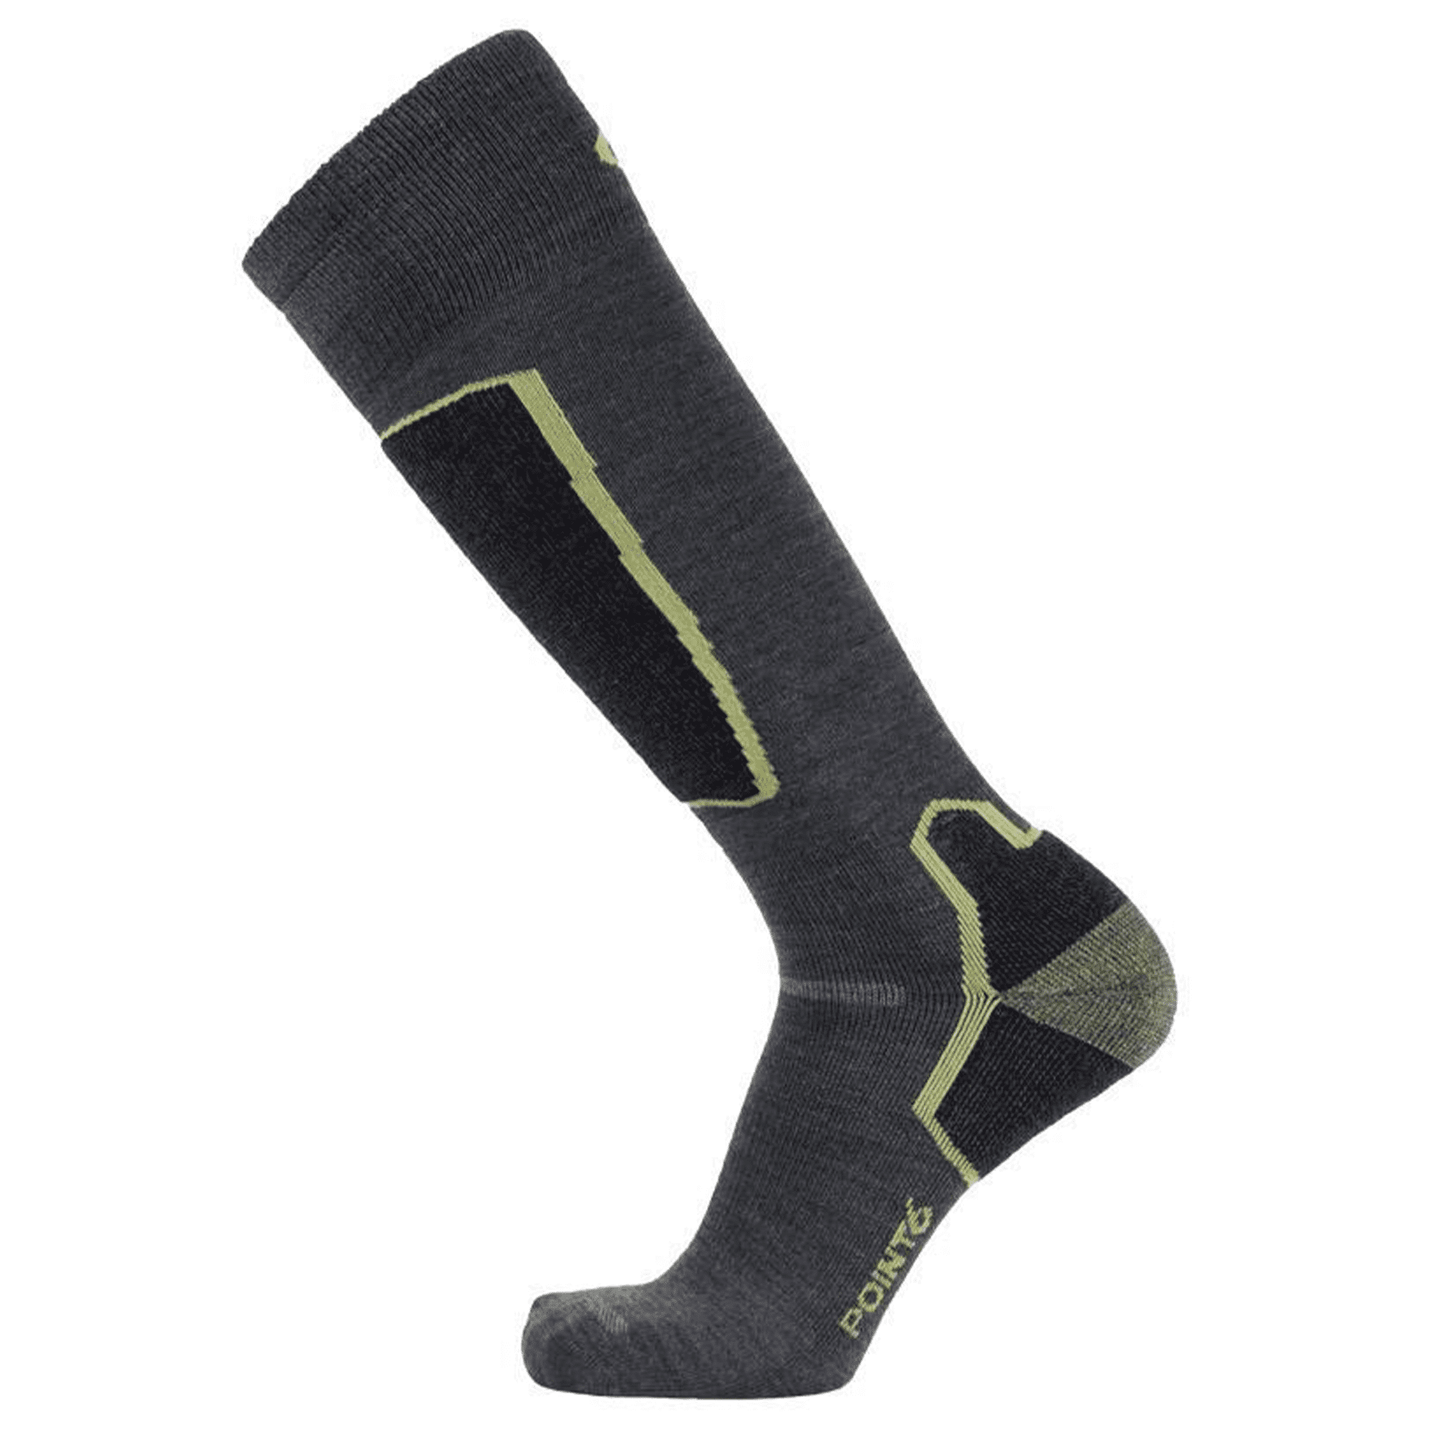 Point6 Merino Wool Ski Socks - Pro Light Bright Lime